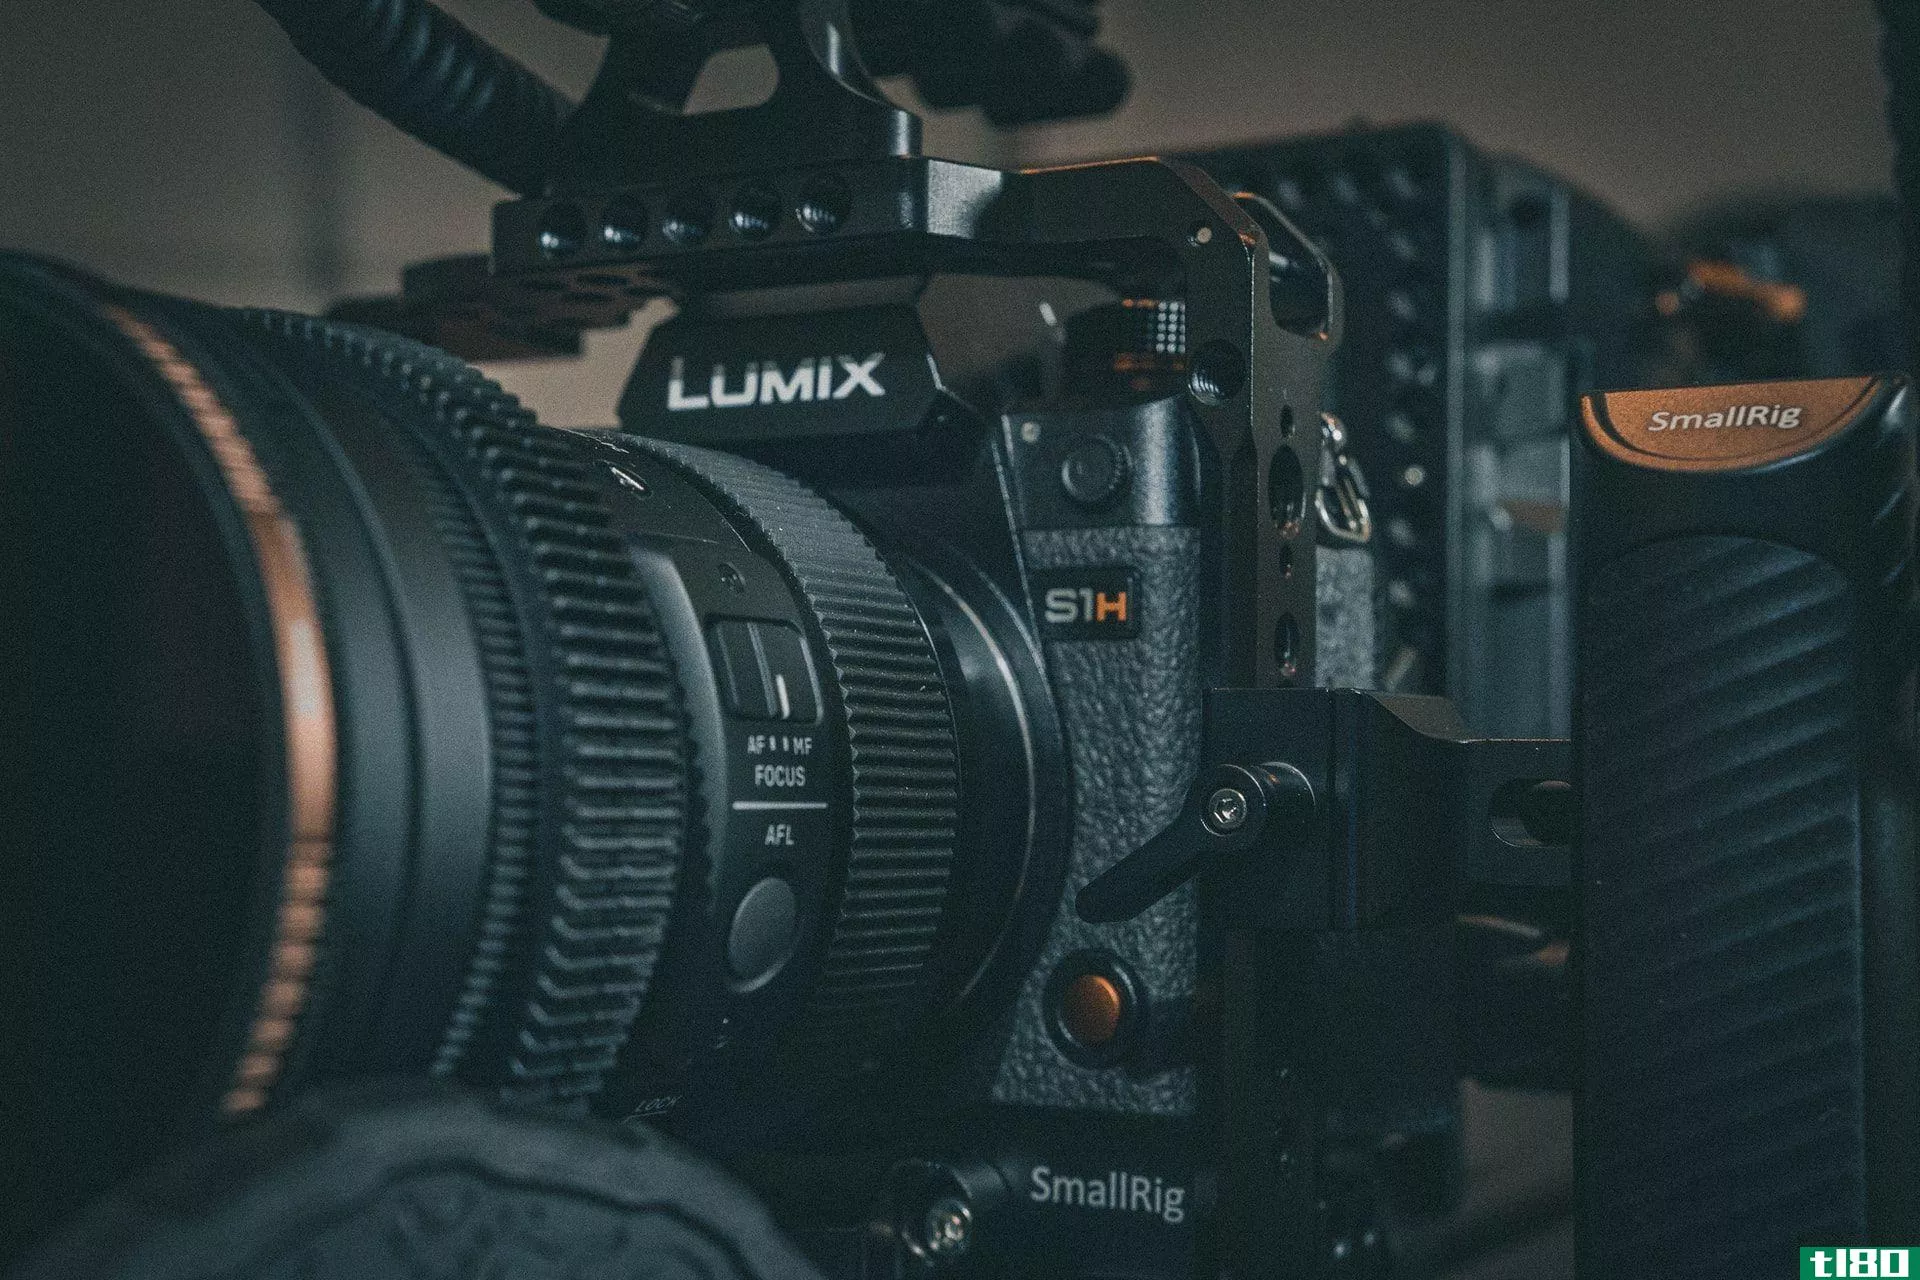 Lumix Panasonic camera